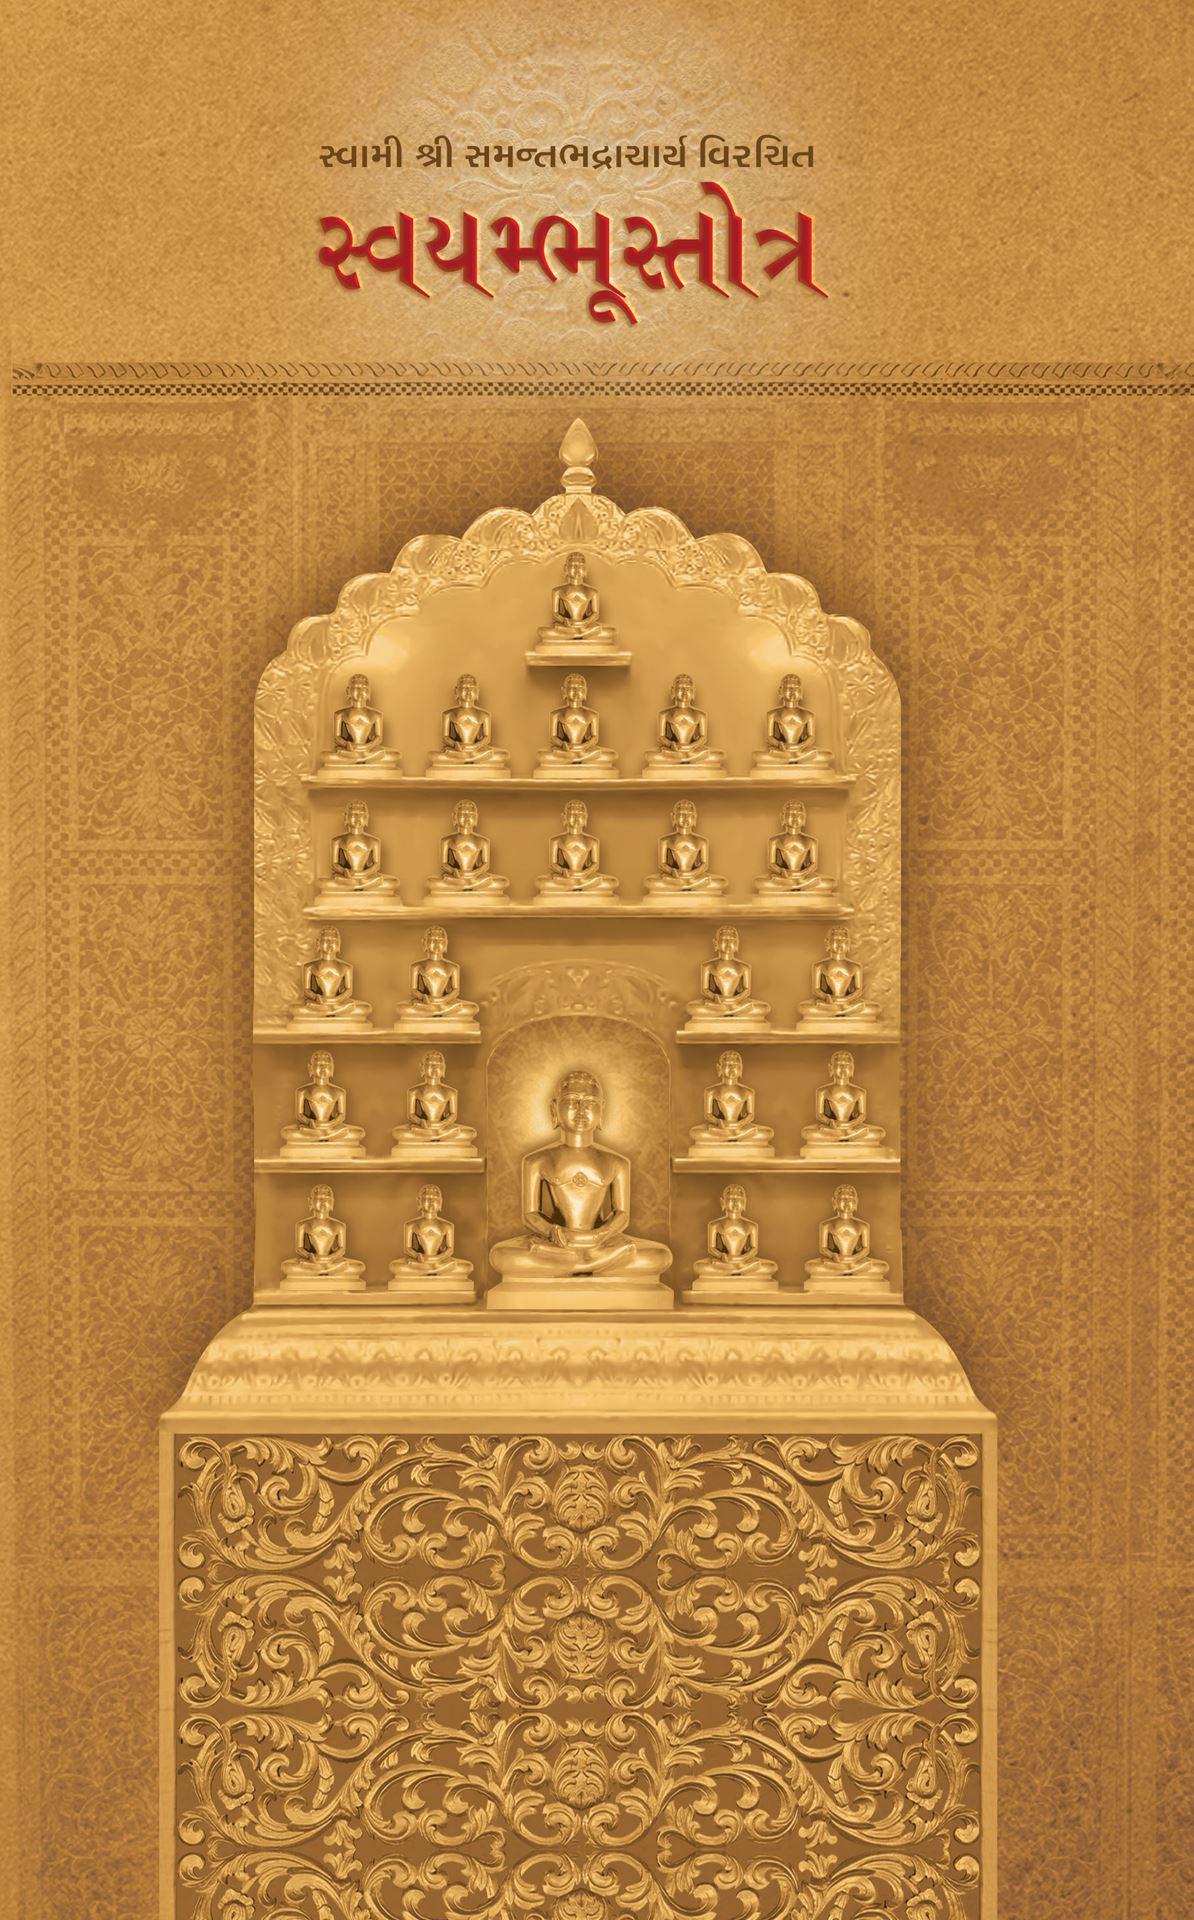 Swami Shri Samantbhadracharya Virachit Swayambhustotra